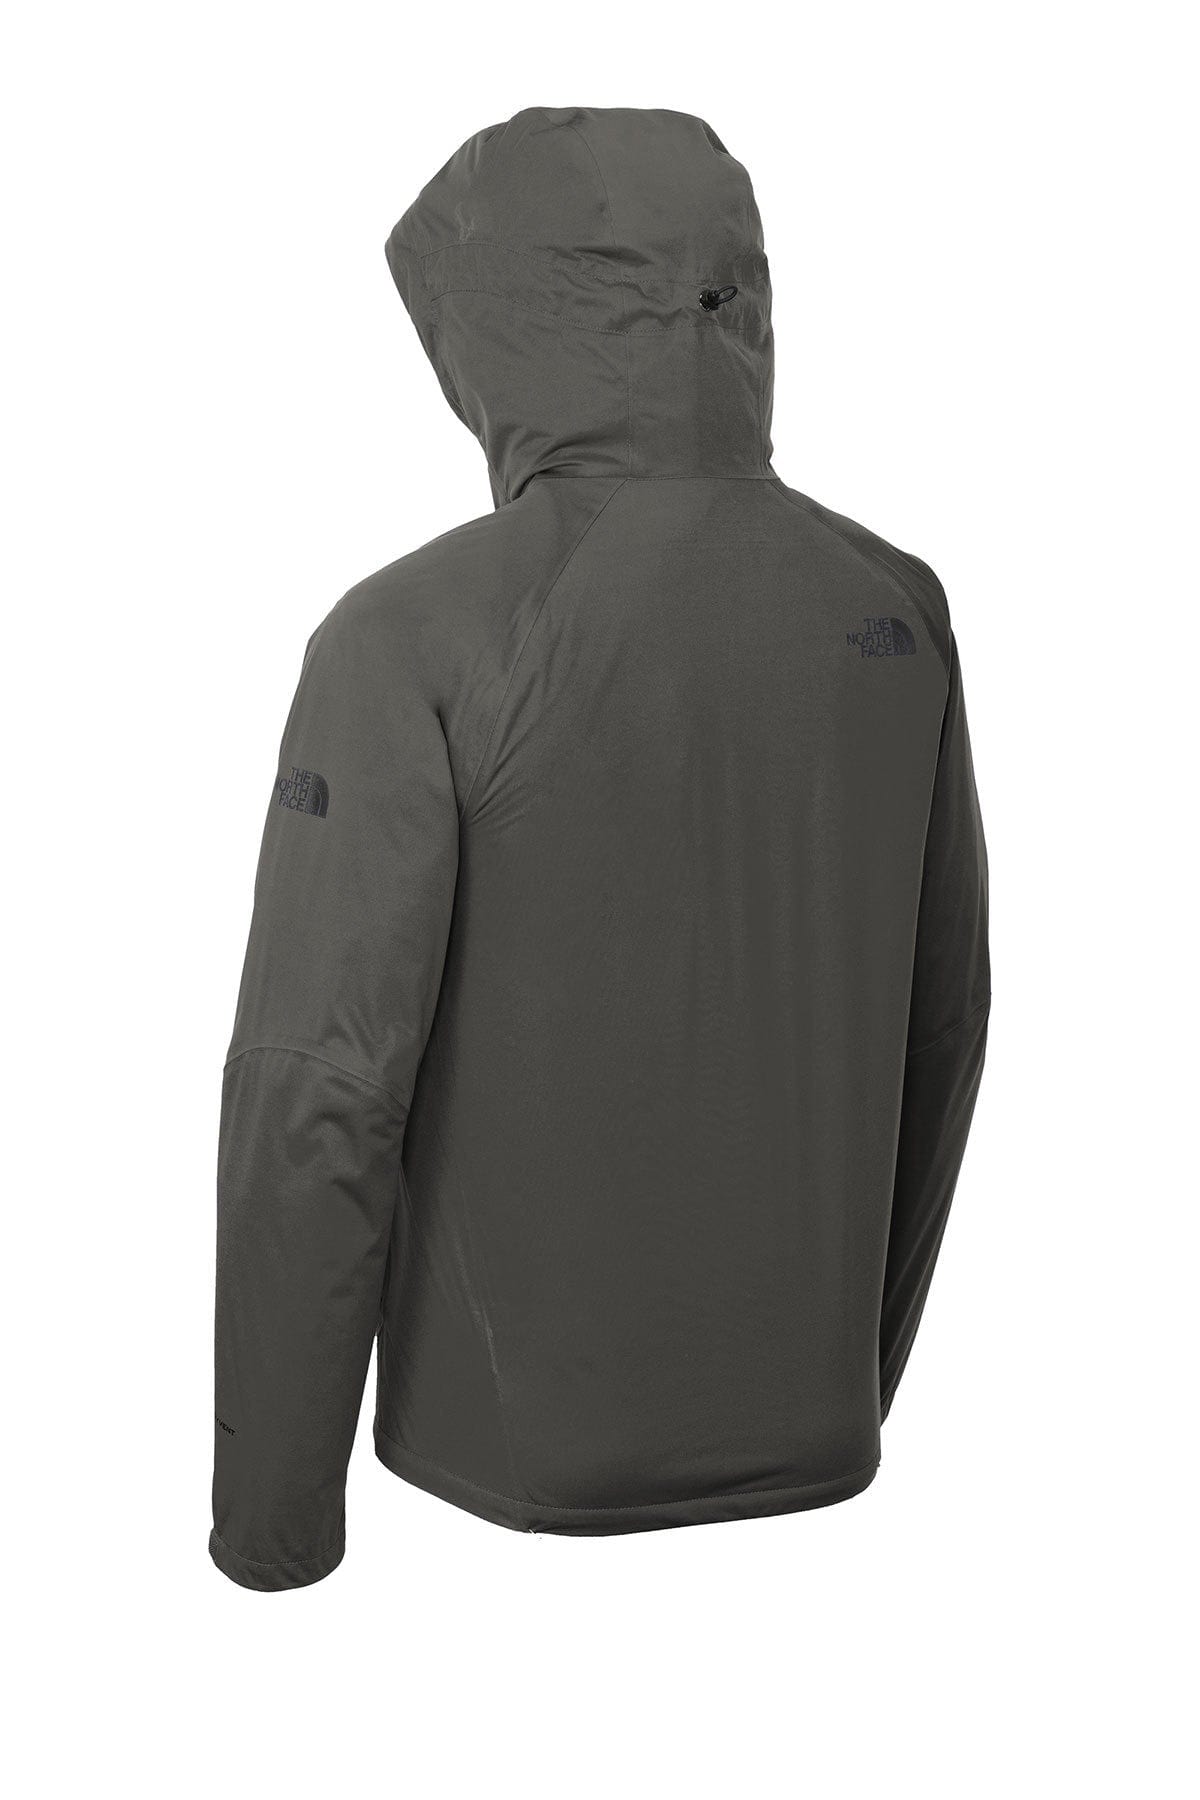 Asphalt Grey / SM Custom The North Face All-Weather DryVent Stretch Jacket